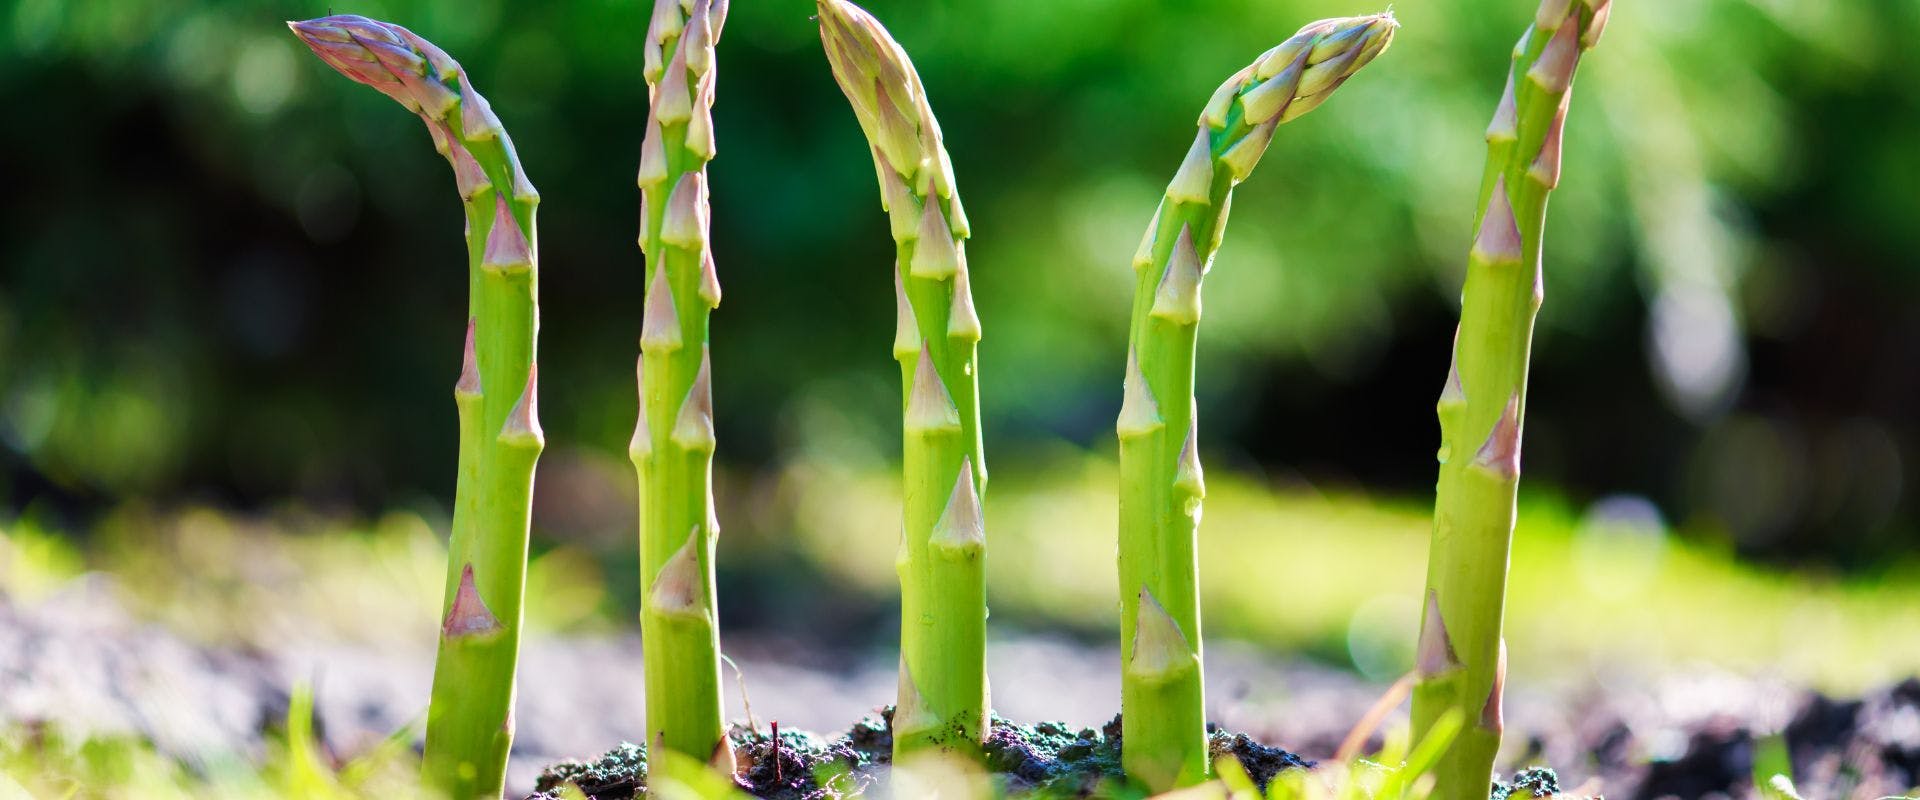 Five asparagus stems growing